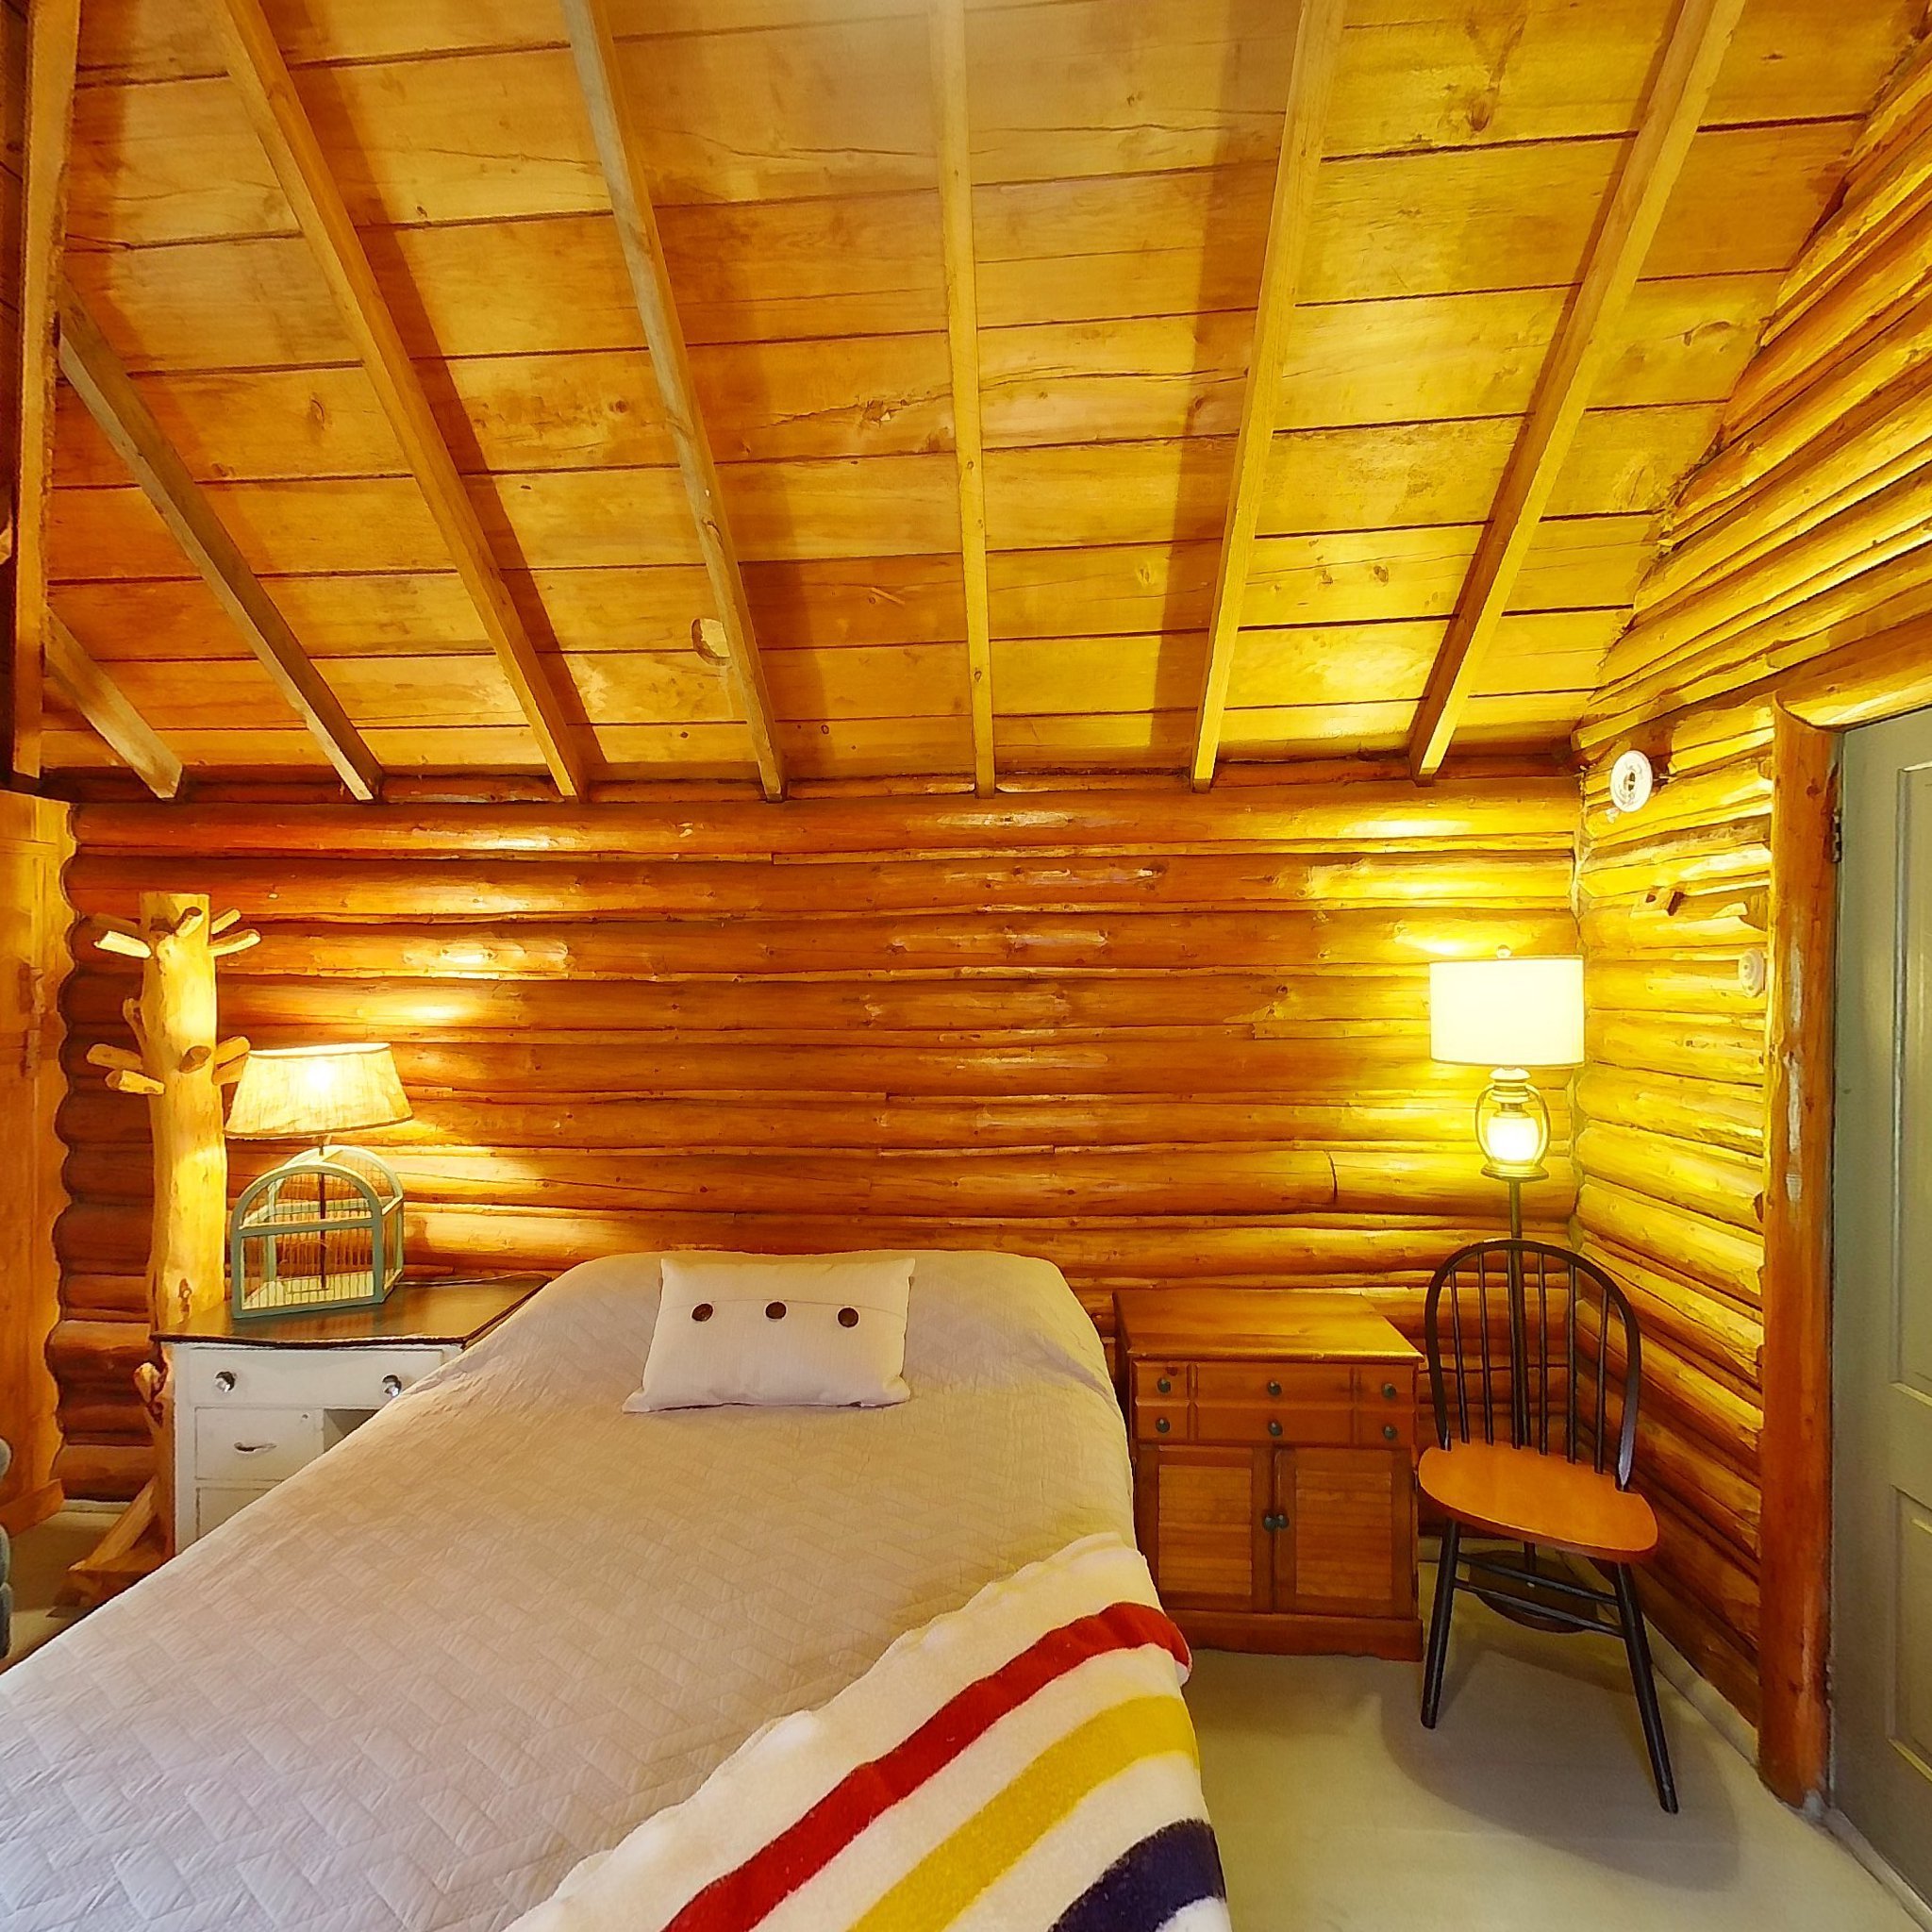 Cabin 8 bedroom.jpg